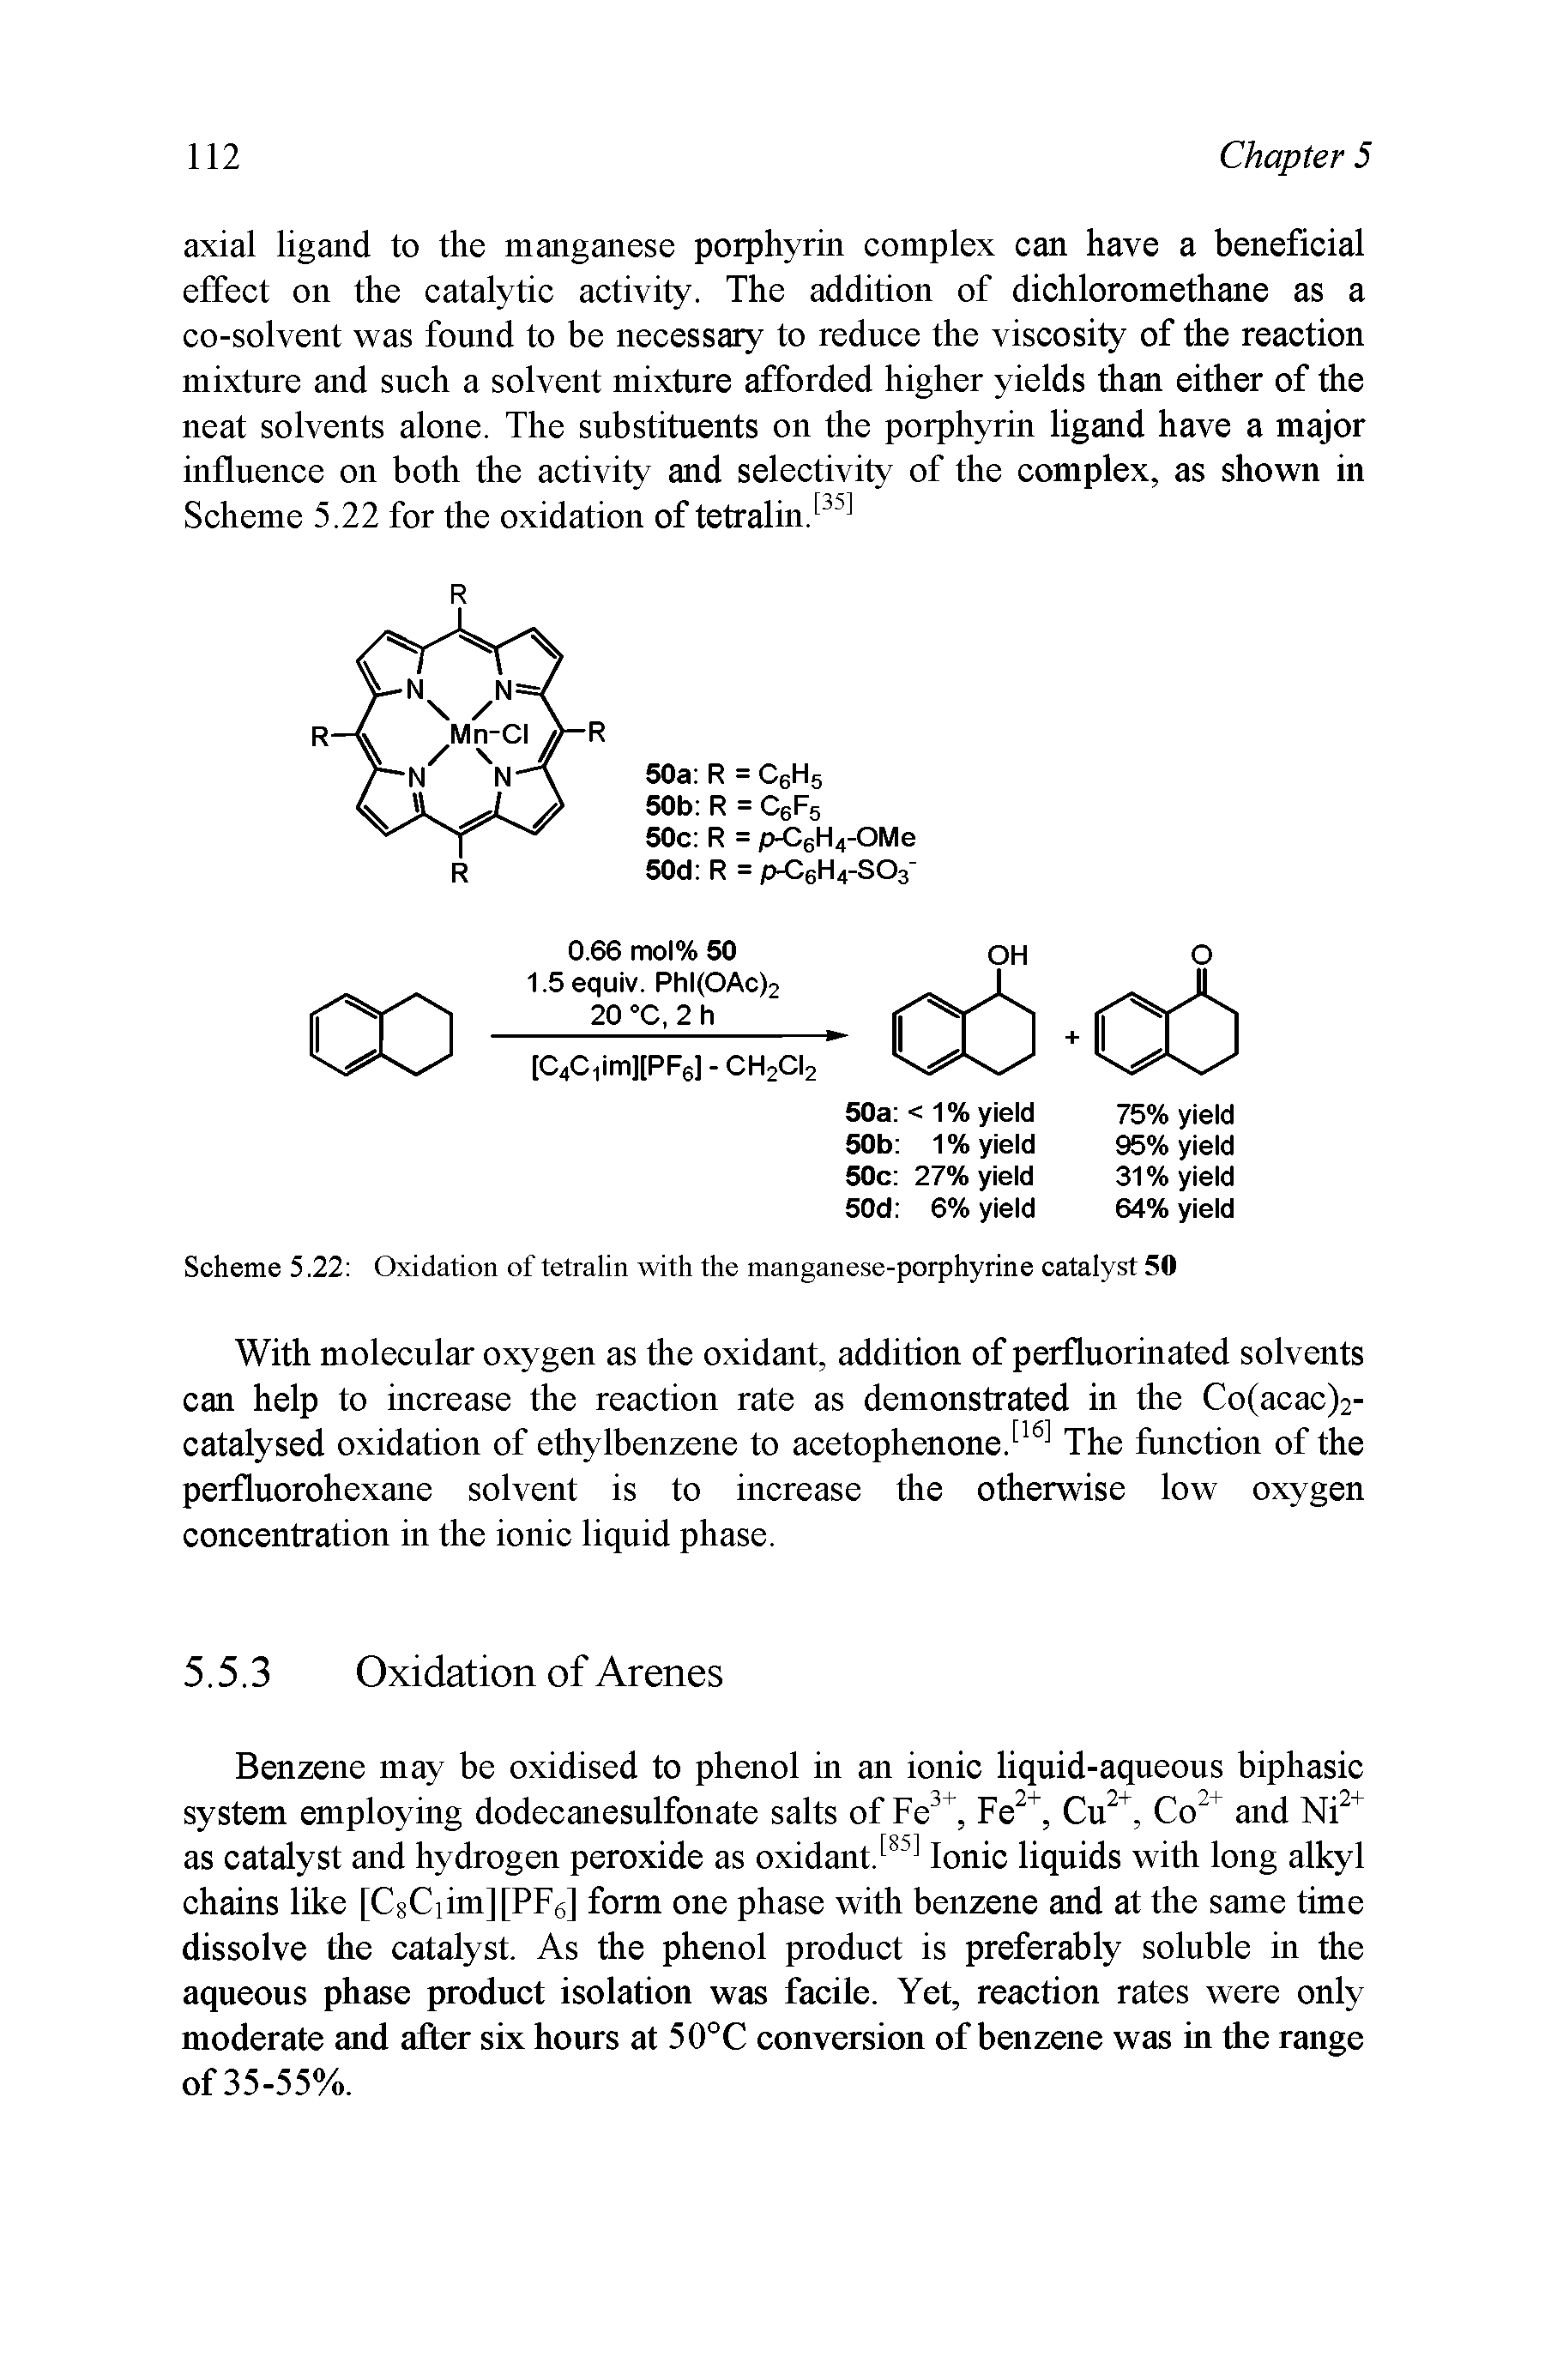 Scheme 5.22 Oxidation of tetralin with the manganese-porphyrine catalyst 50...